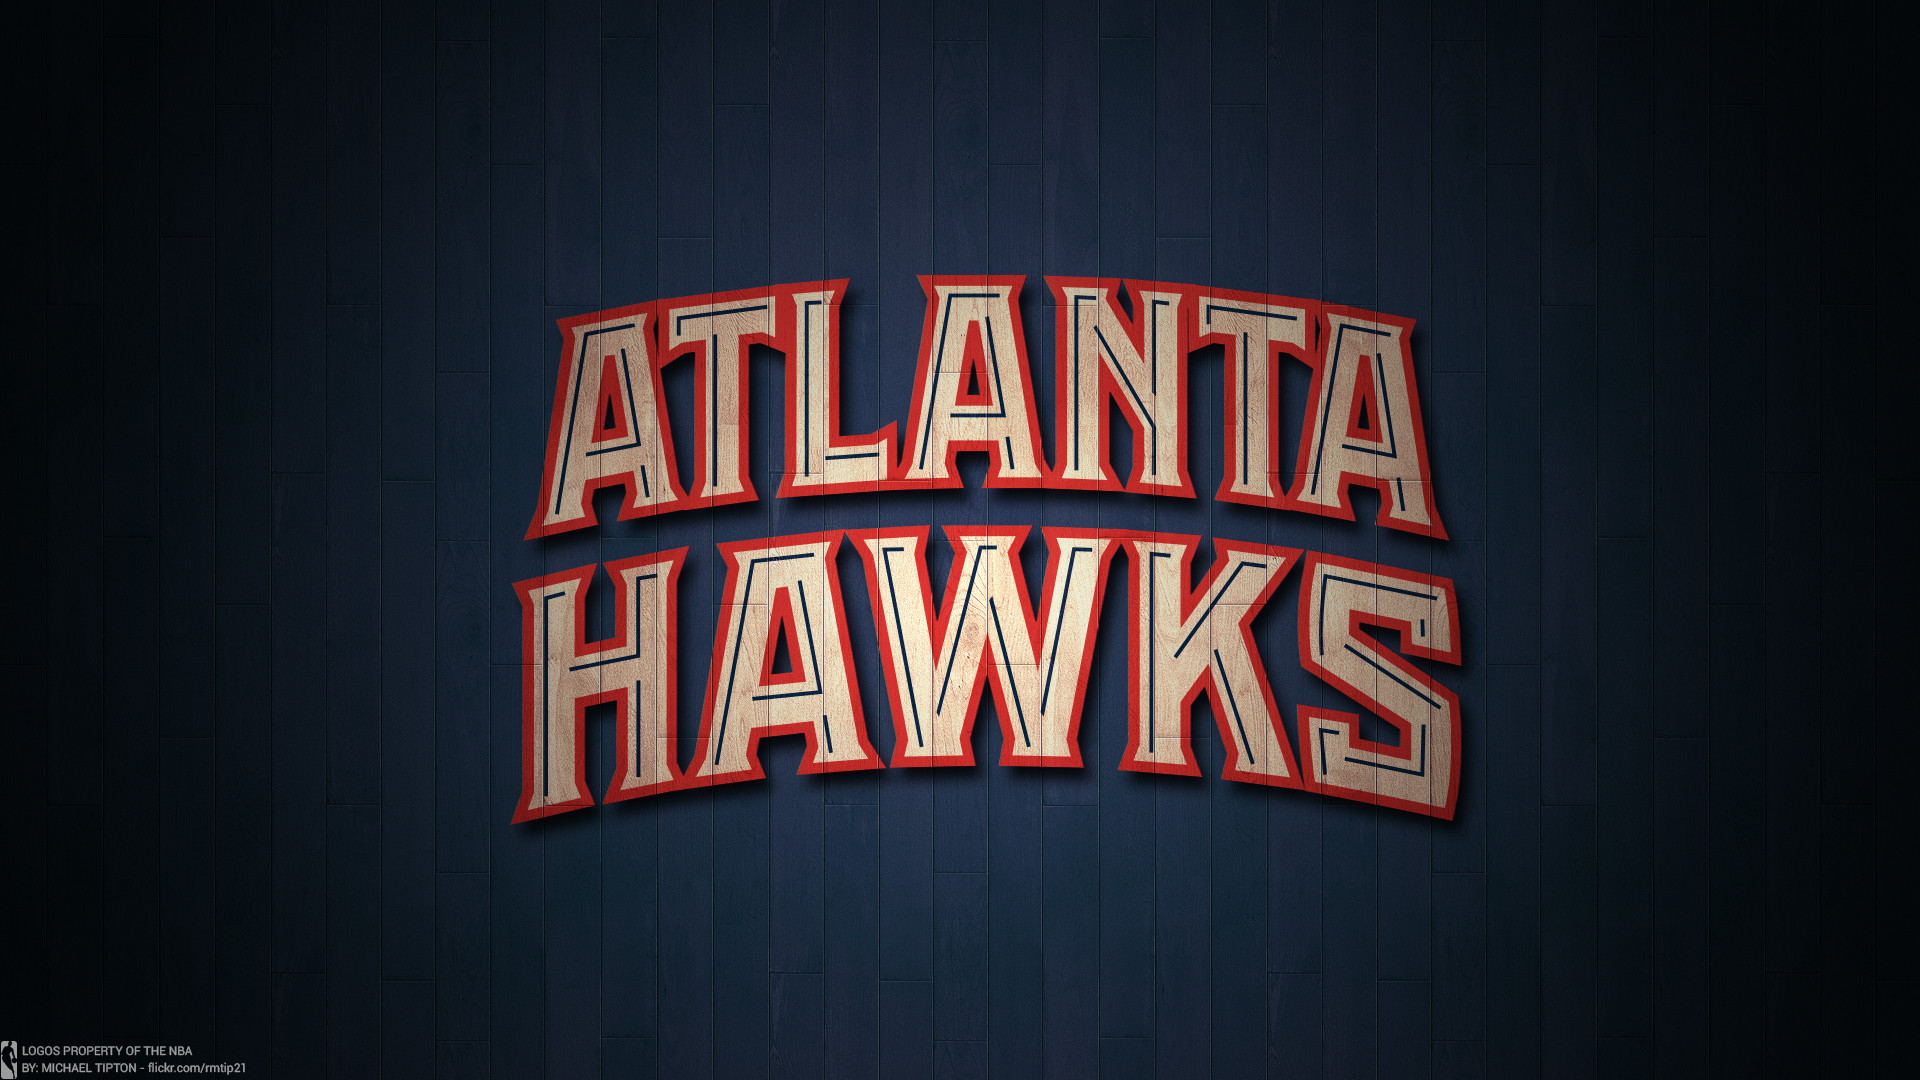 1920x1080 Atlanta Hawks Basketball team